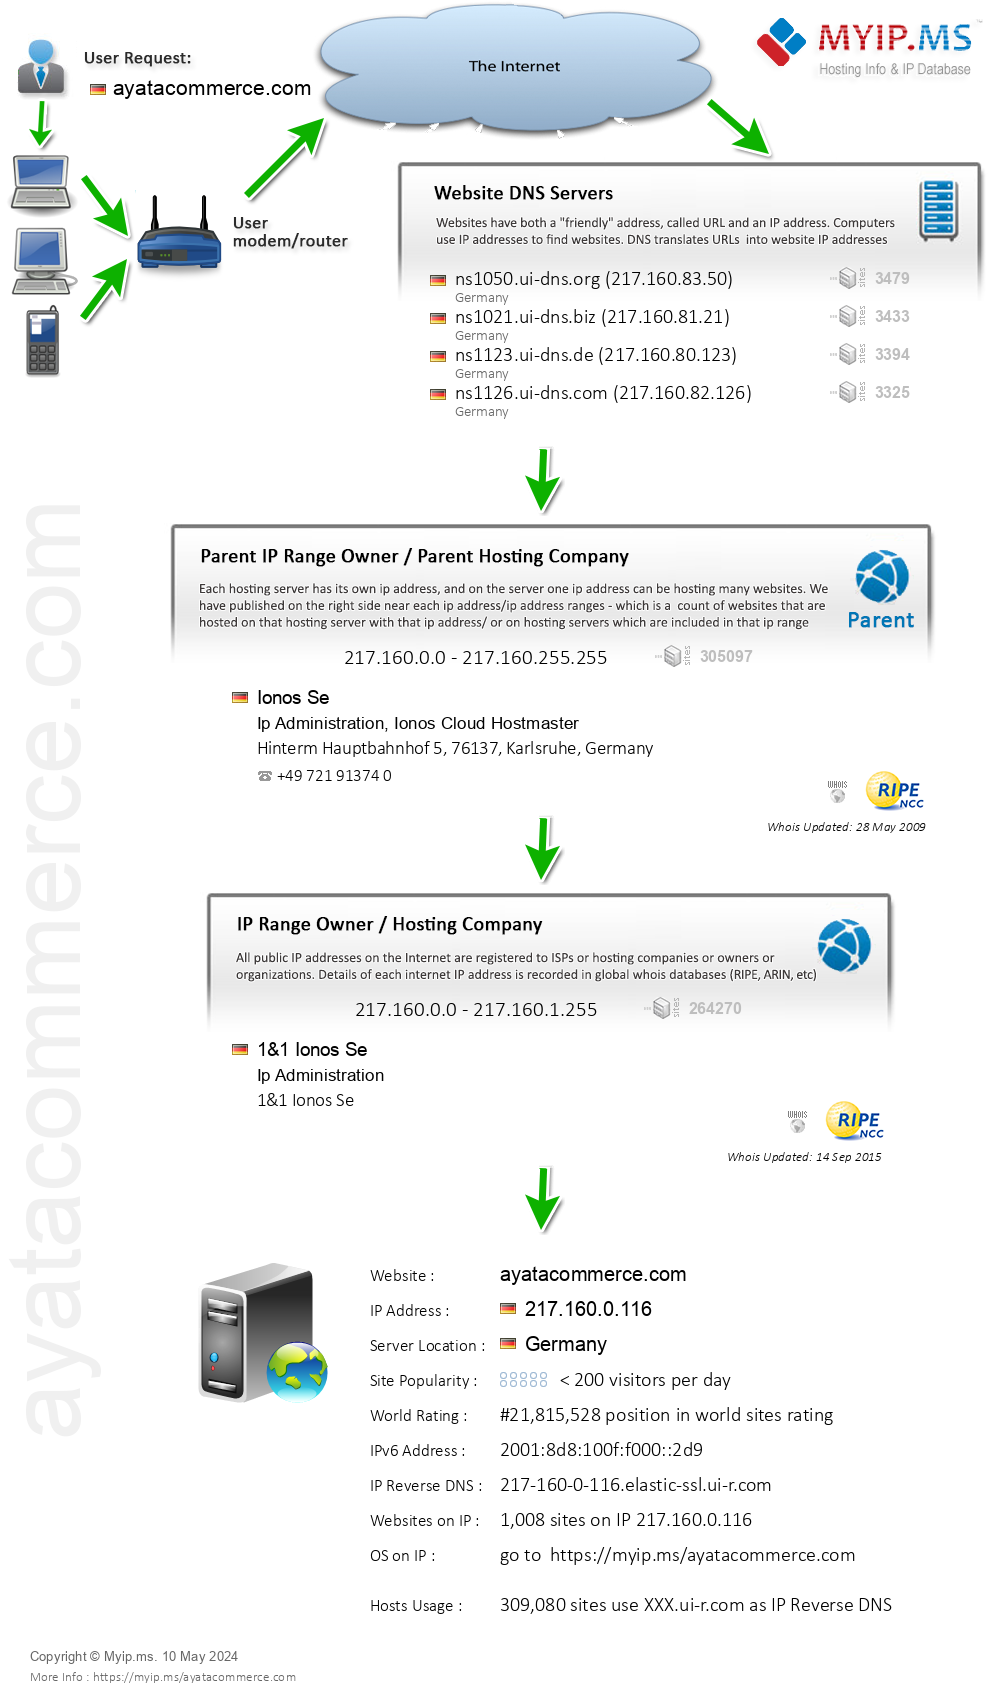 Ayatacommerce.com - Website Hosting Visual IP Diagram